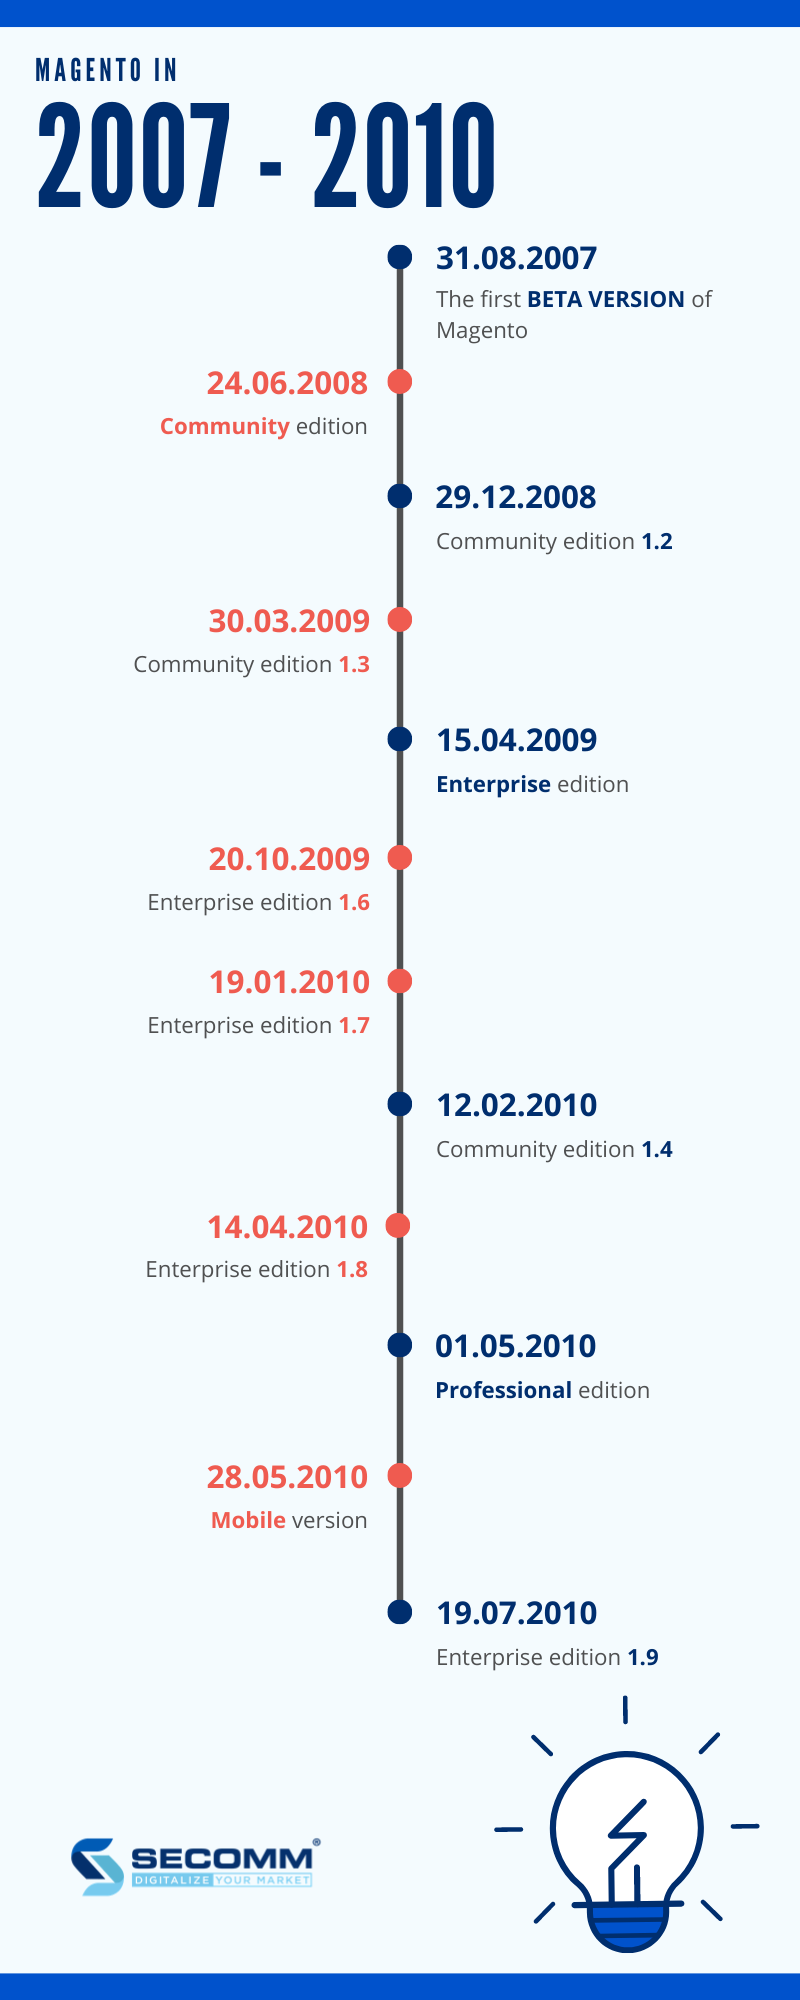 Magento timeline 2007 - 2010